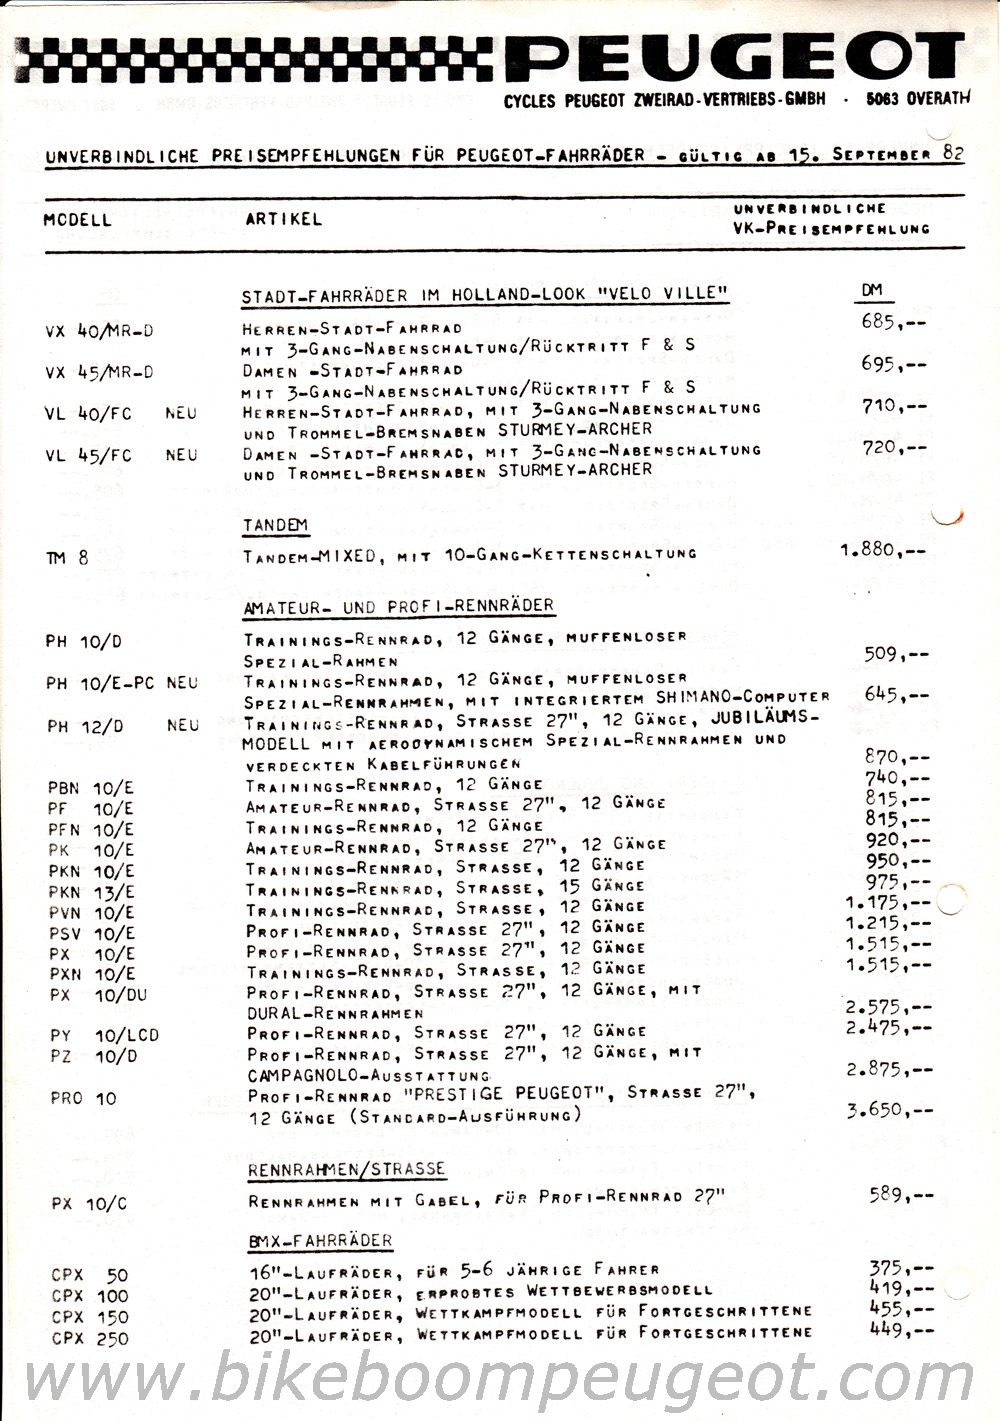 Peugeot 1982 Germany Flyer Price List Back.jpg